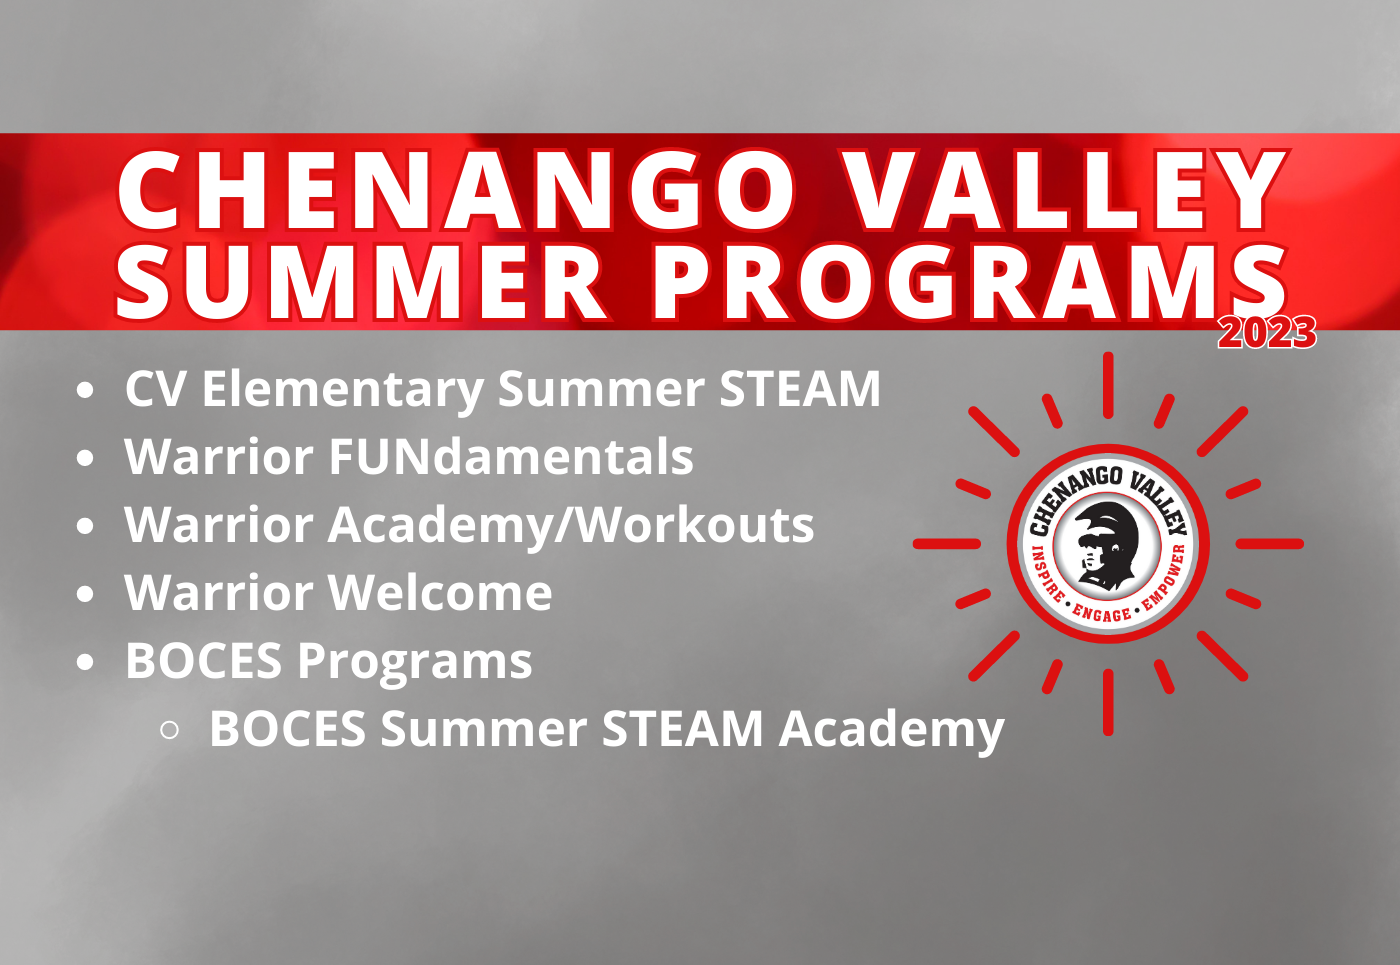 Chenango Valley Summer Programs 2023